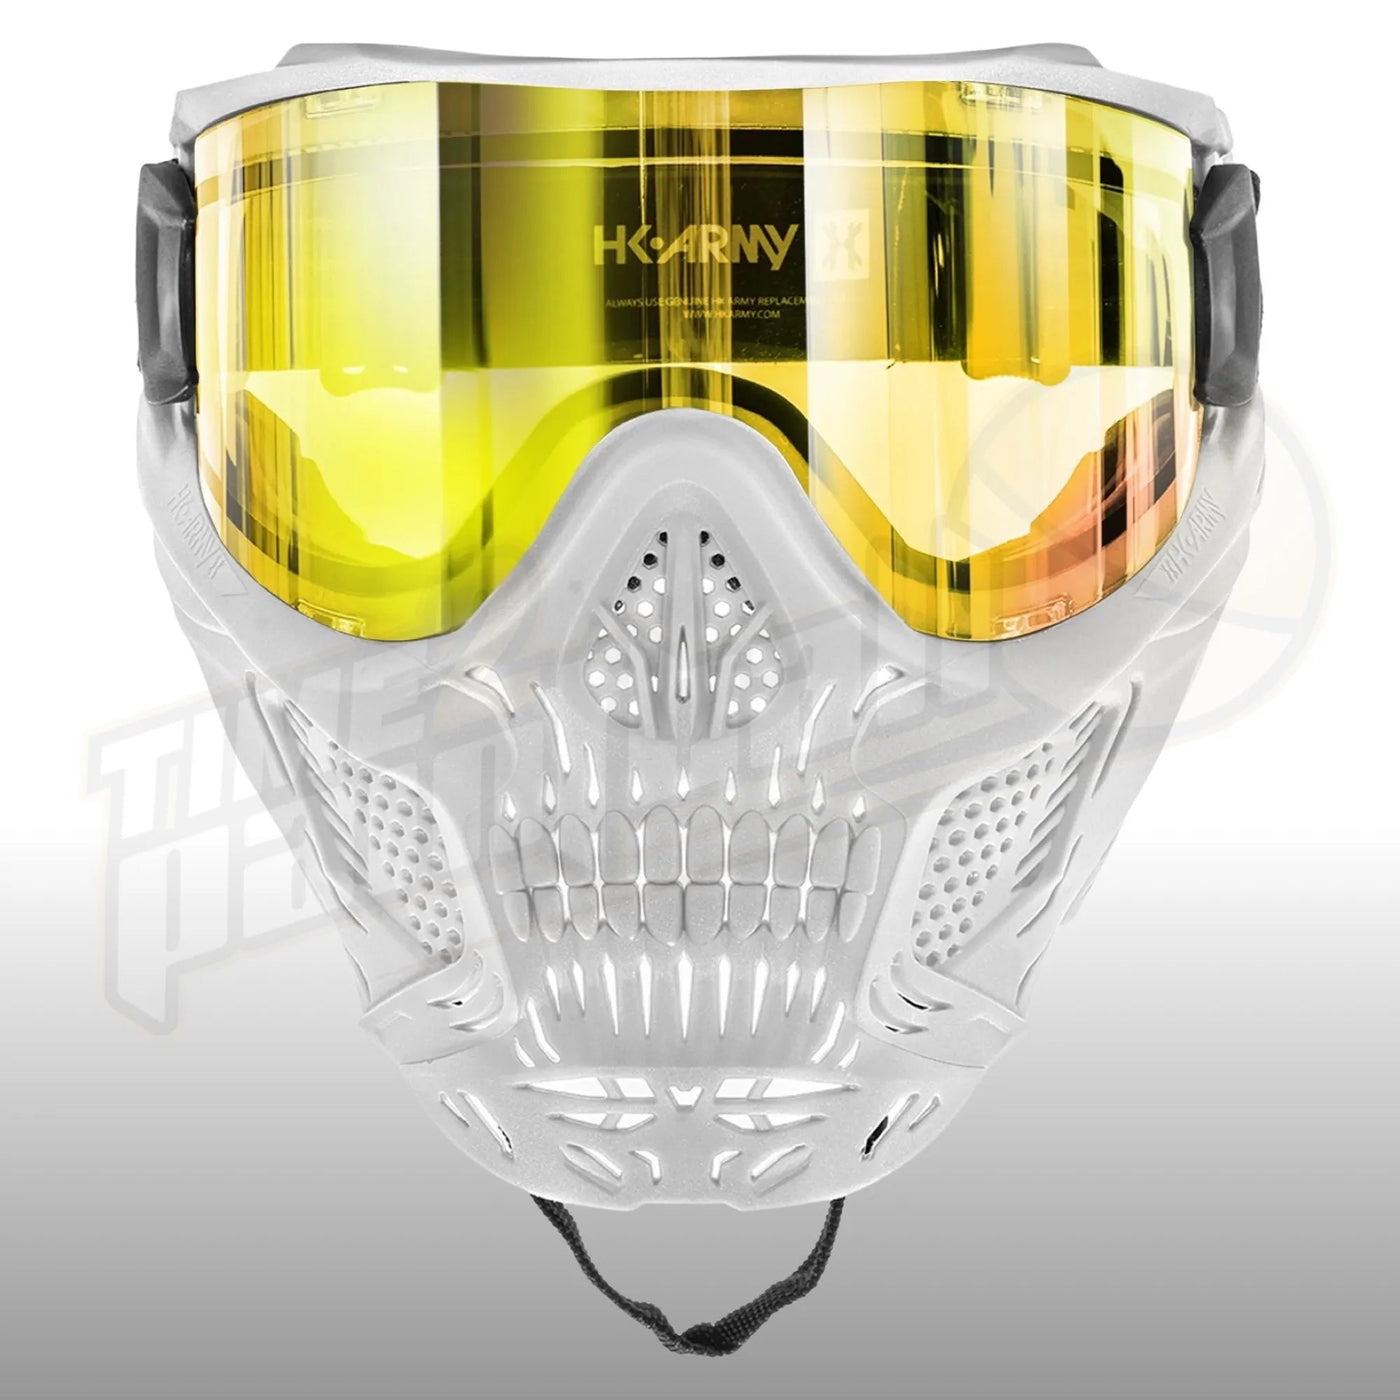 HK Army HSTL Skull Goggle Saint White w/ Gold Lens - Time 2 Paintball